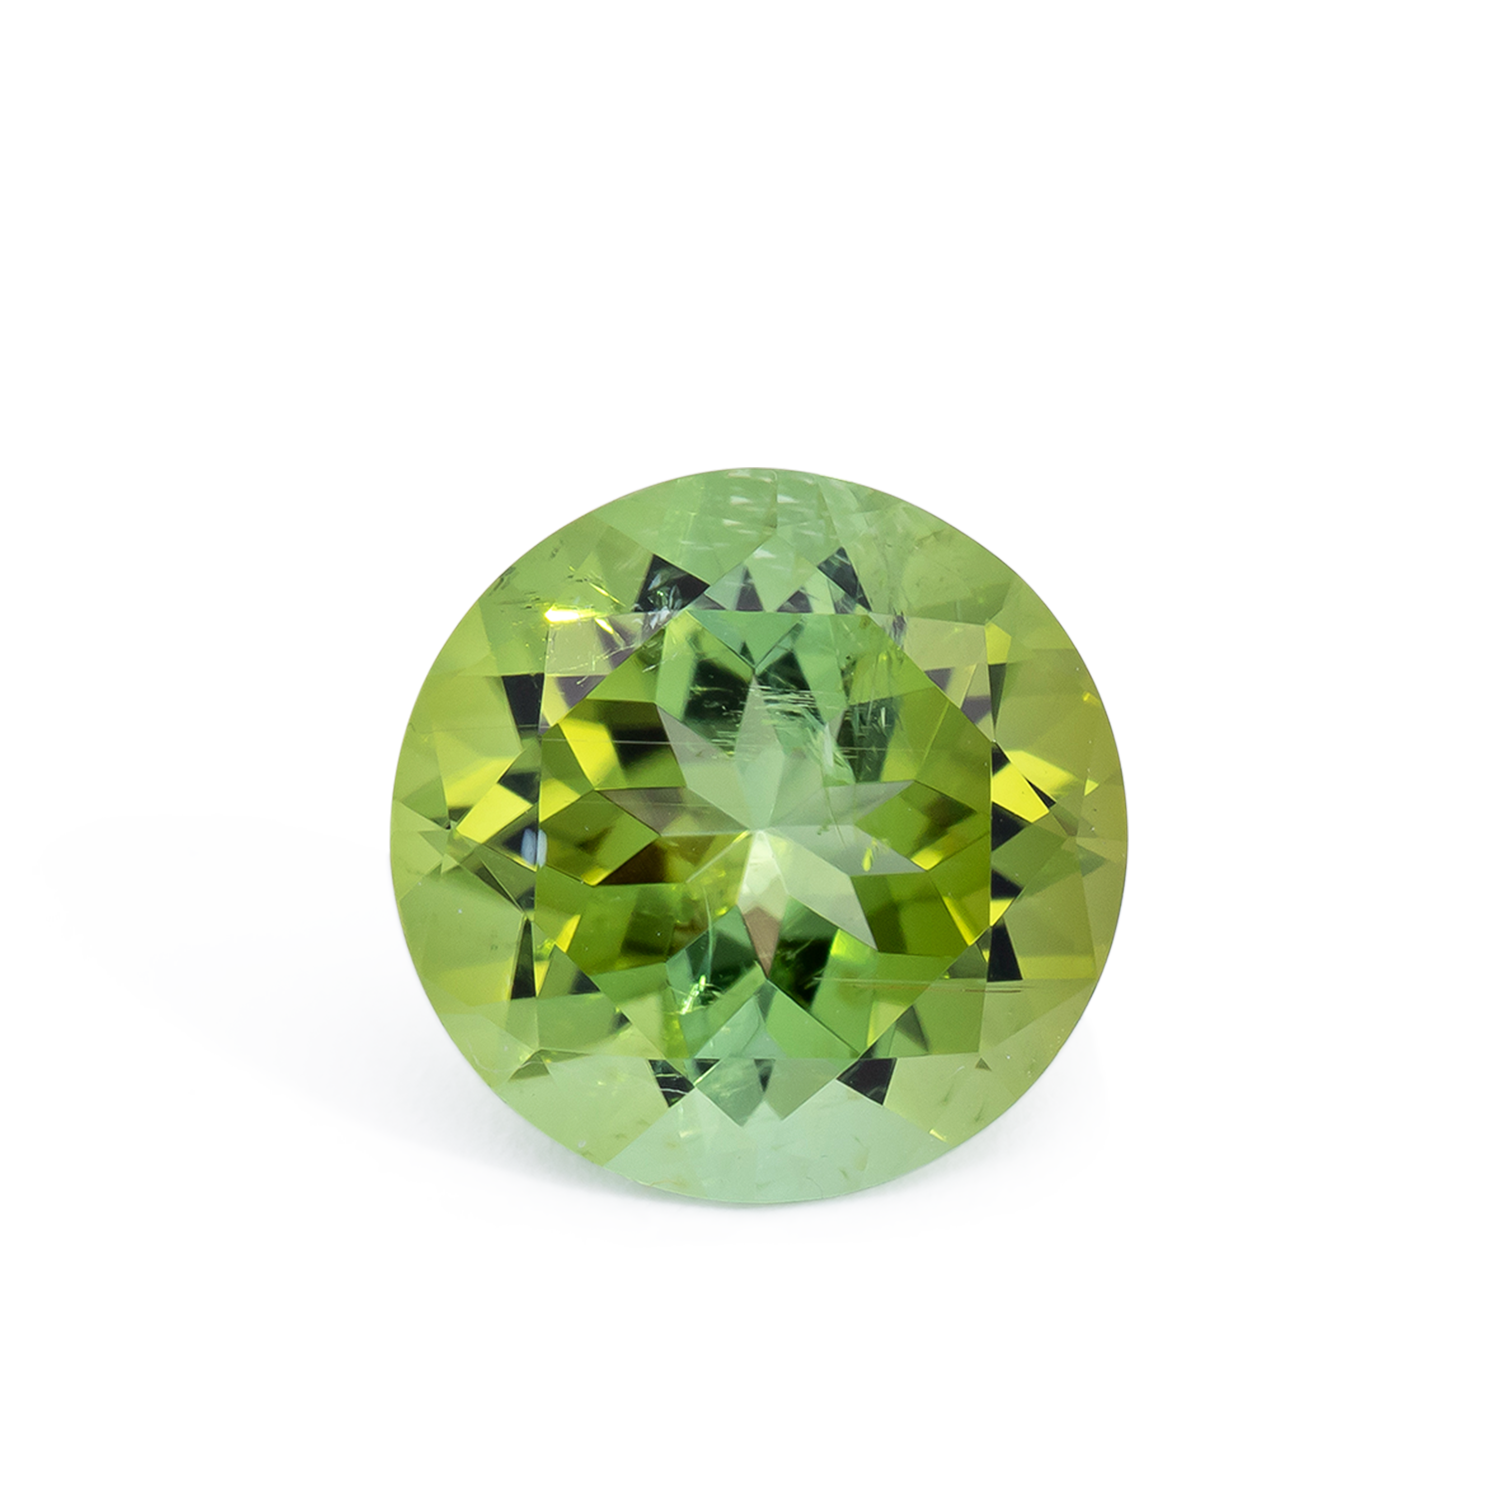 Paraiba Tourmaline - green, round, 9.4x9.4 mm, 3.01 cts, No. PT90020